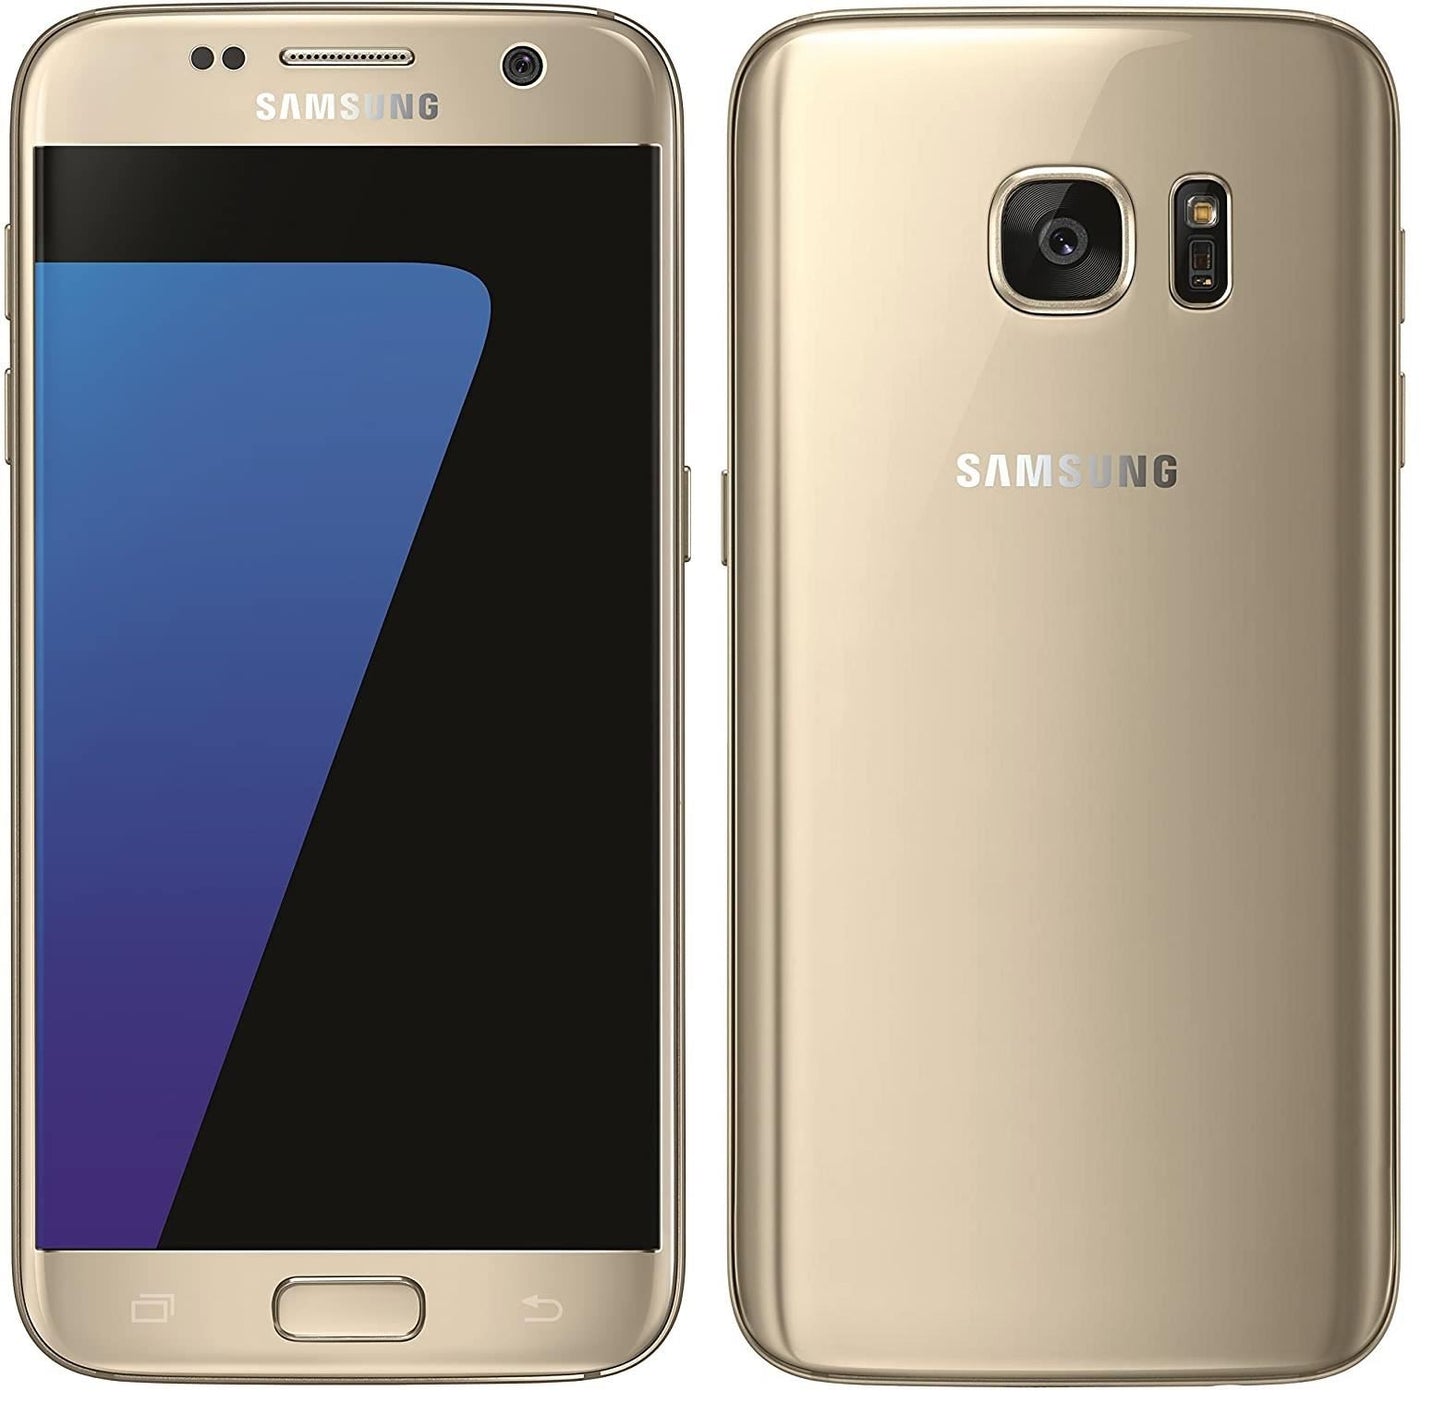 Samsung Galaxy S7 4G Smartphone Unlocked Android 32-64GB